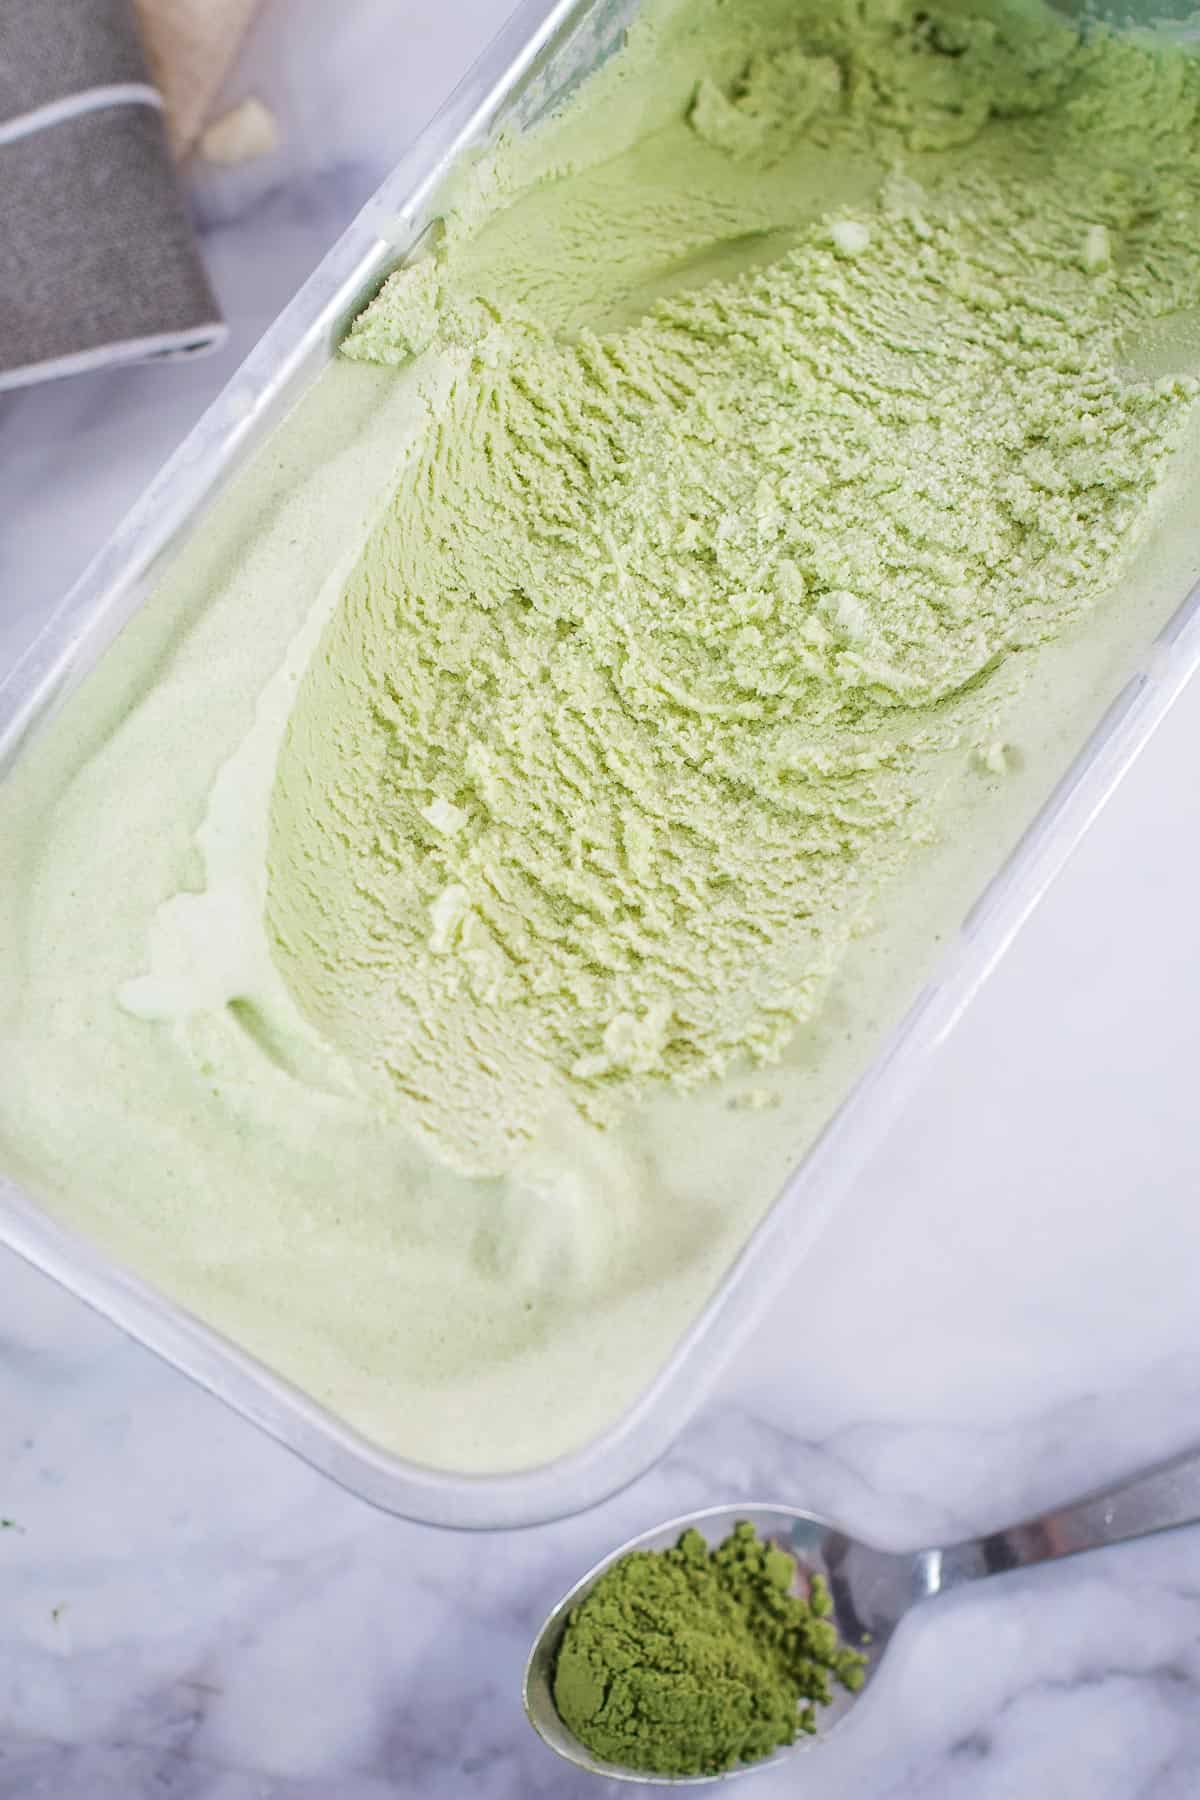 An ice cream tub with matcha ice cream.